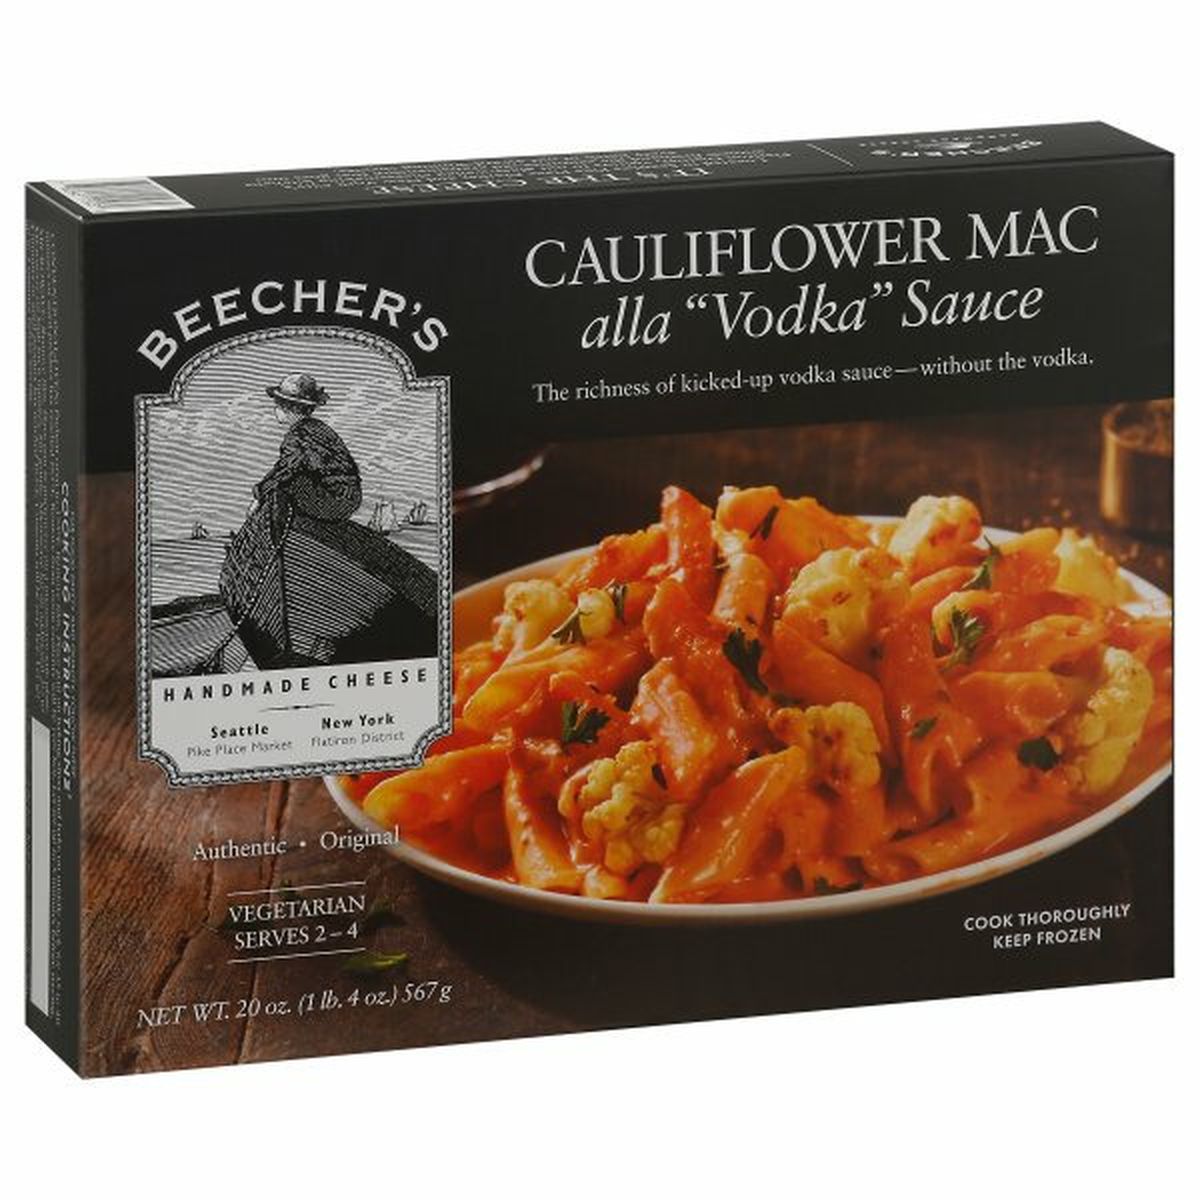 Calories in Beecher's Cauliflower Mac Alla Vodka Sauce